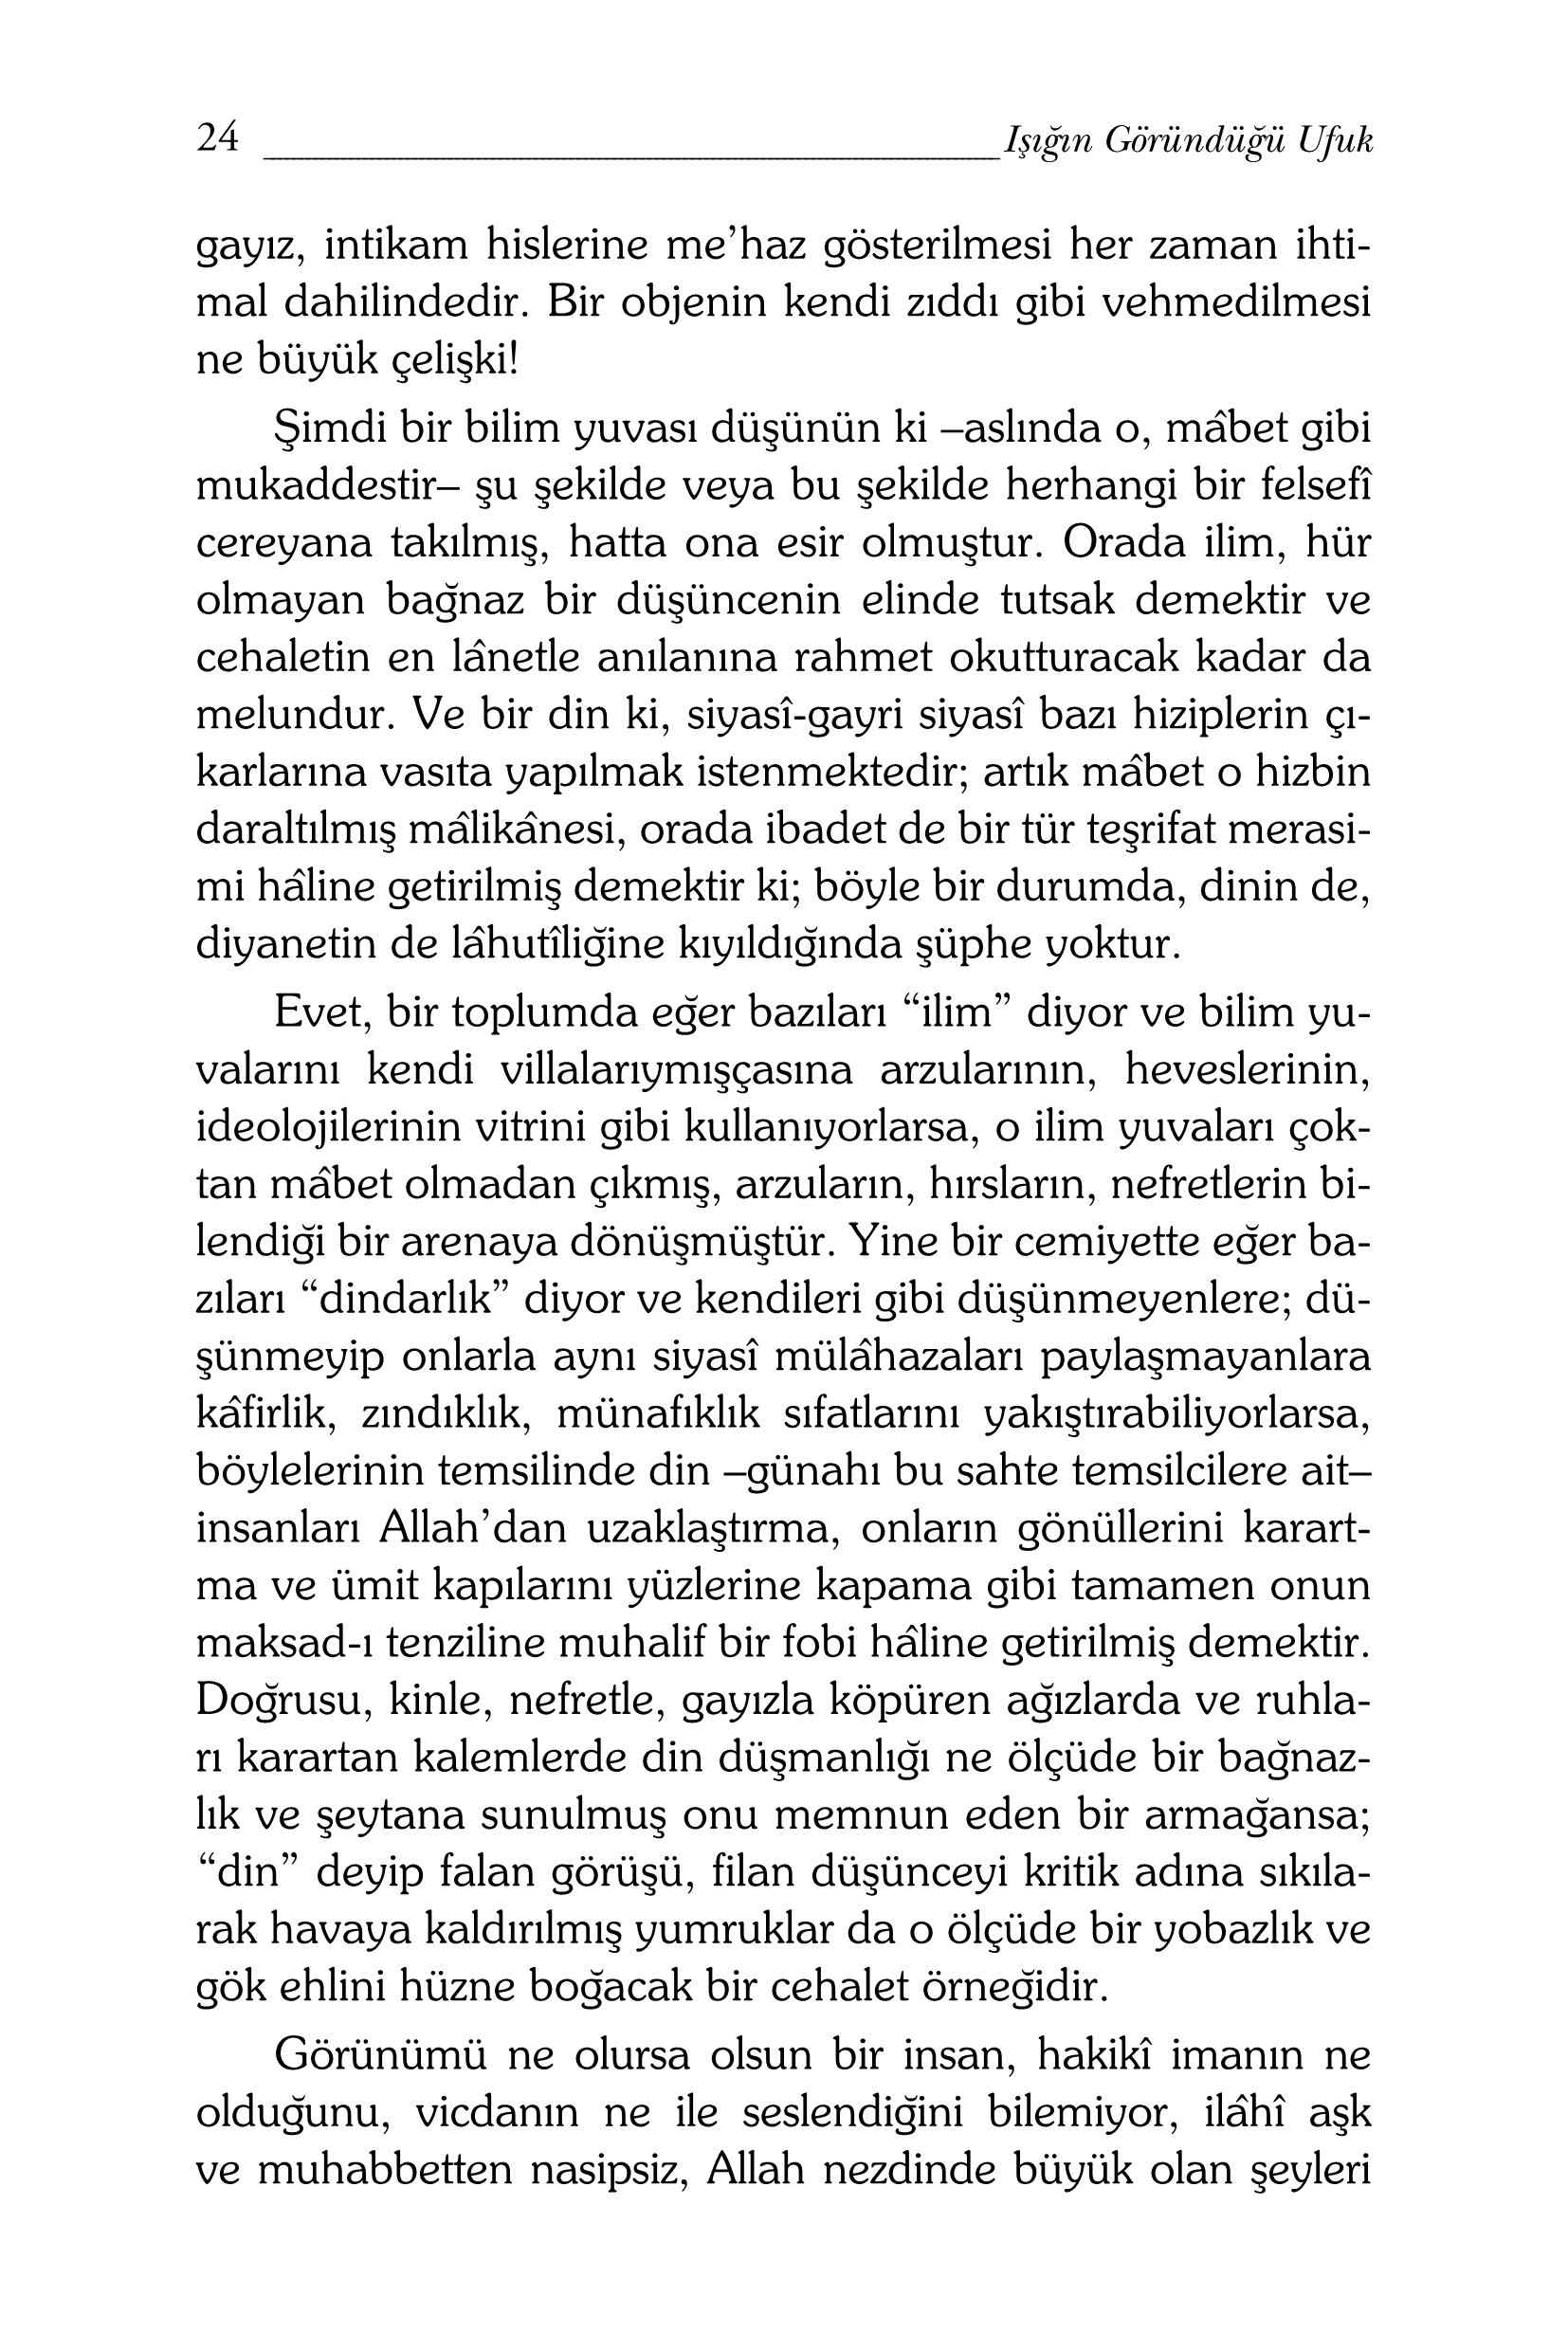 Cag ve Nesil-7-Isigin Gorundugu Ufuk - M F Gulen.pdf, 304-Sayfa 